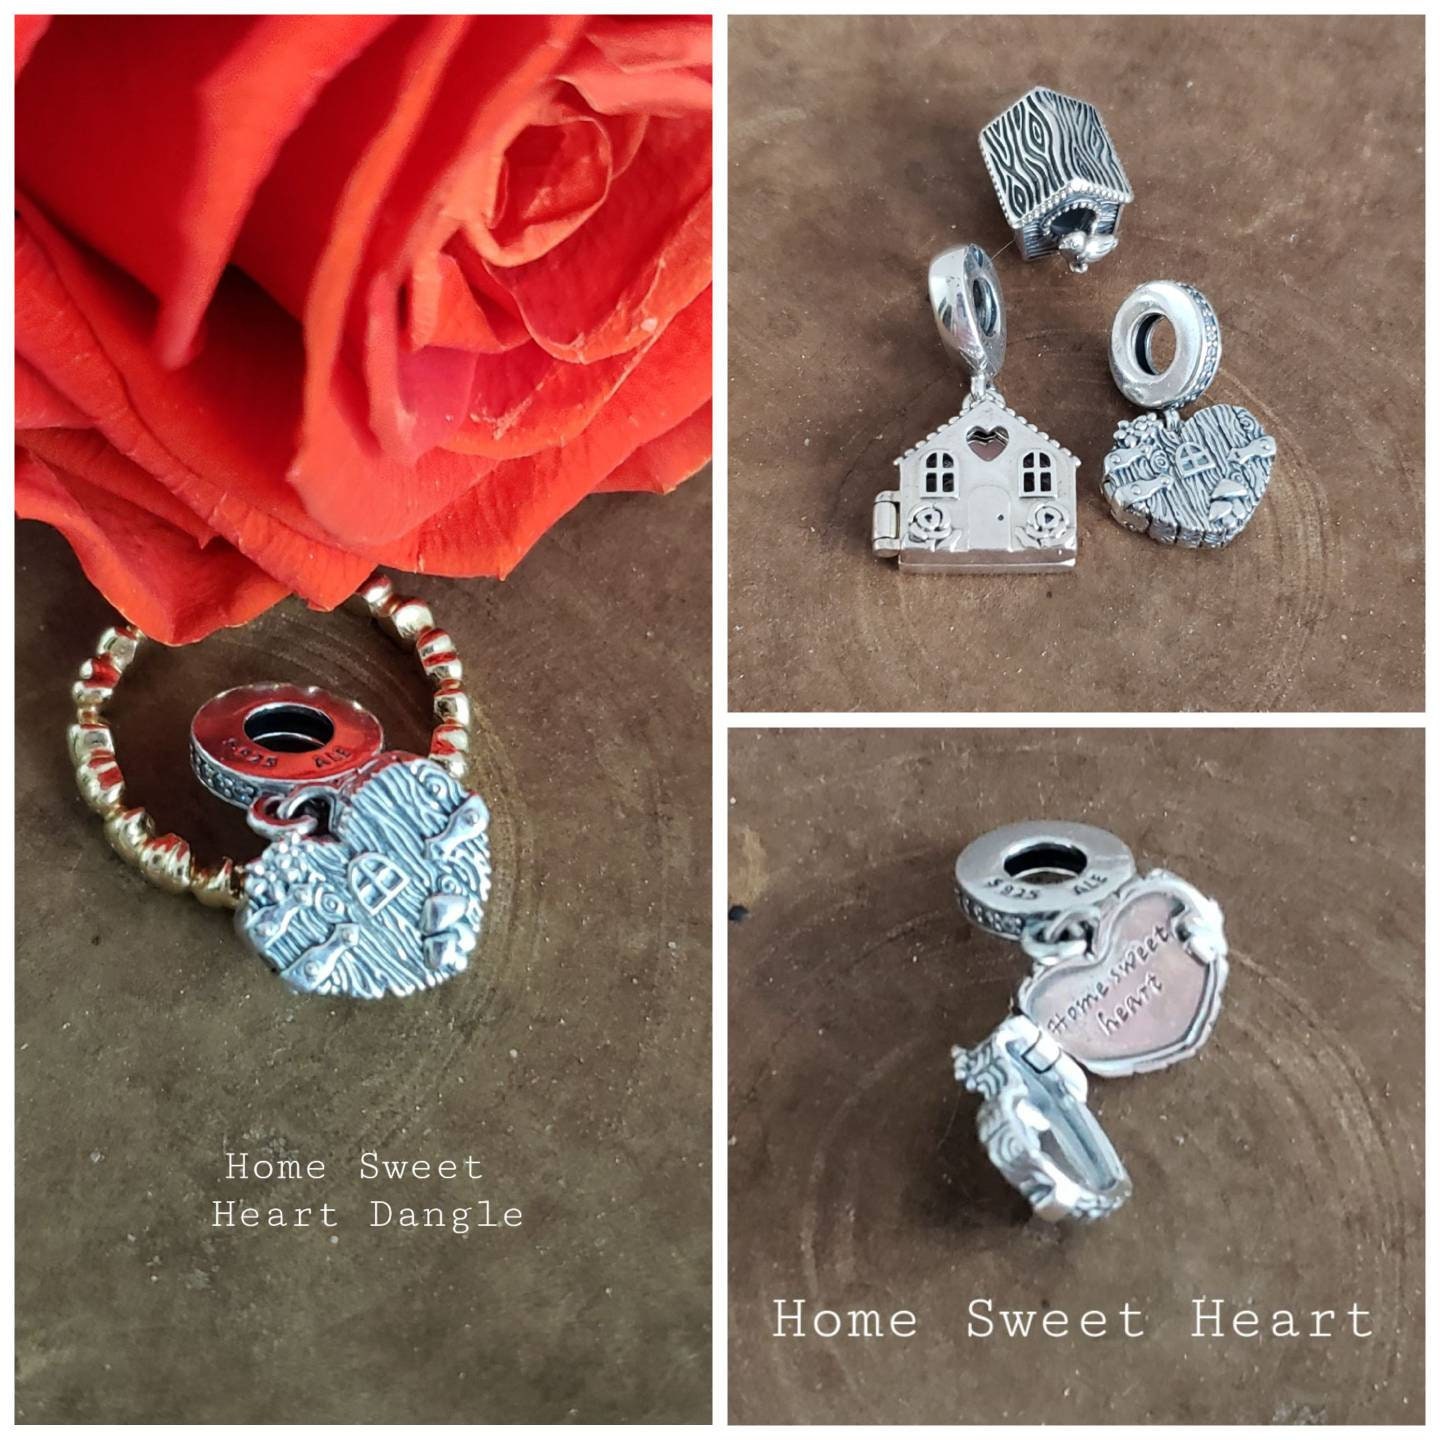 REVIEW: Pandora Home Sweet Heart Pendant Charm - The Art of